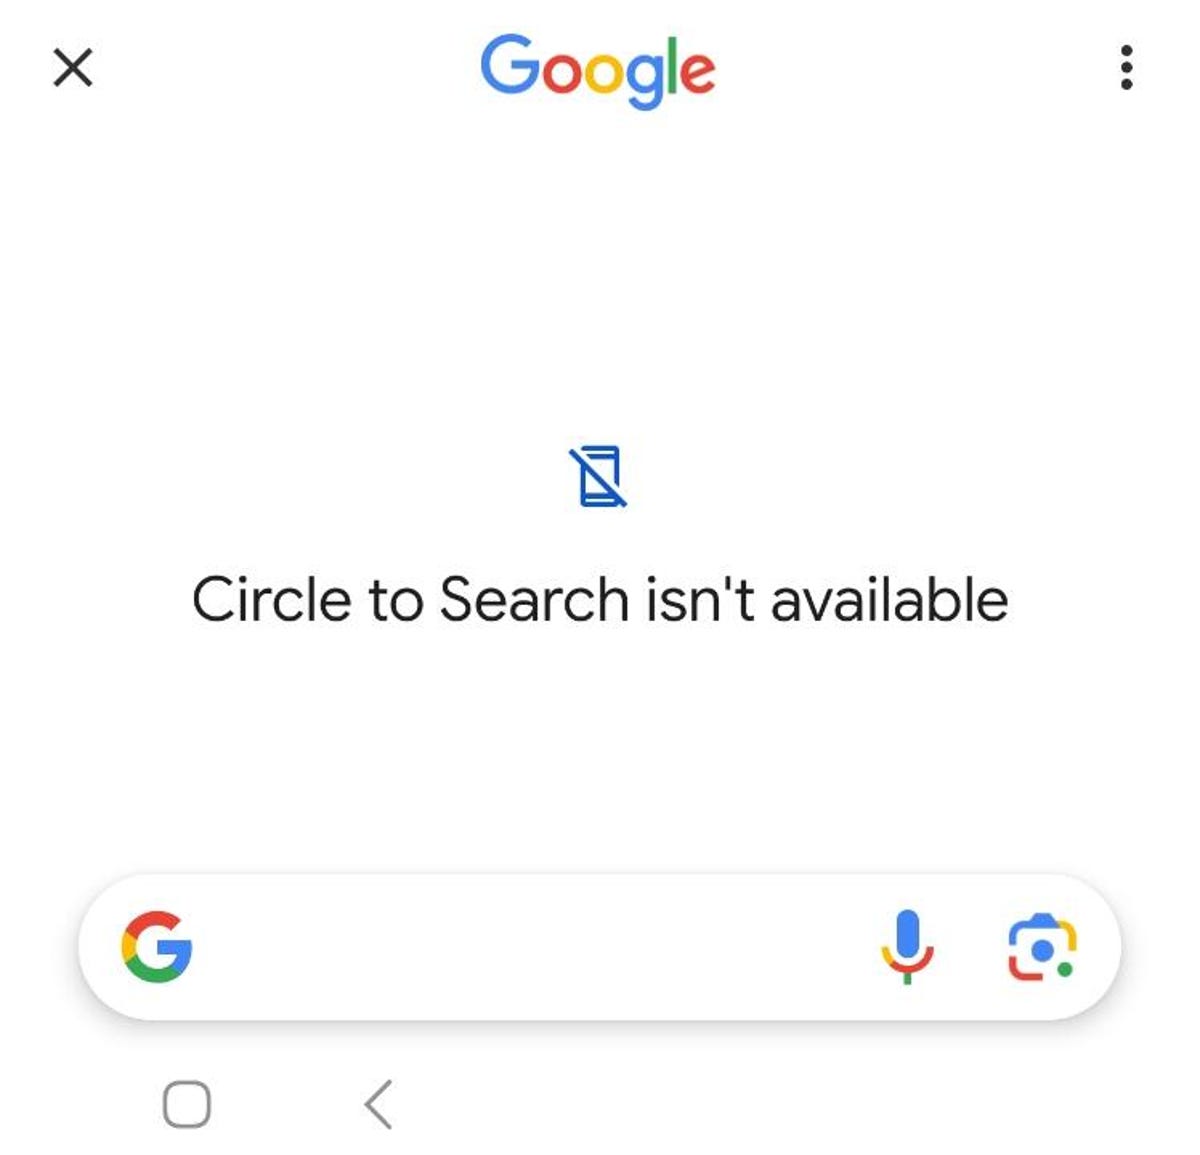 A screenshot showing the Google search bar